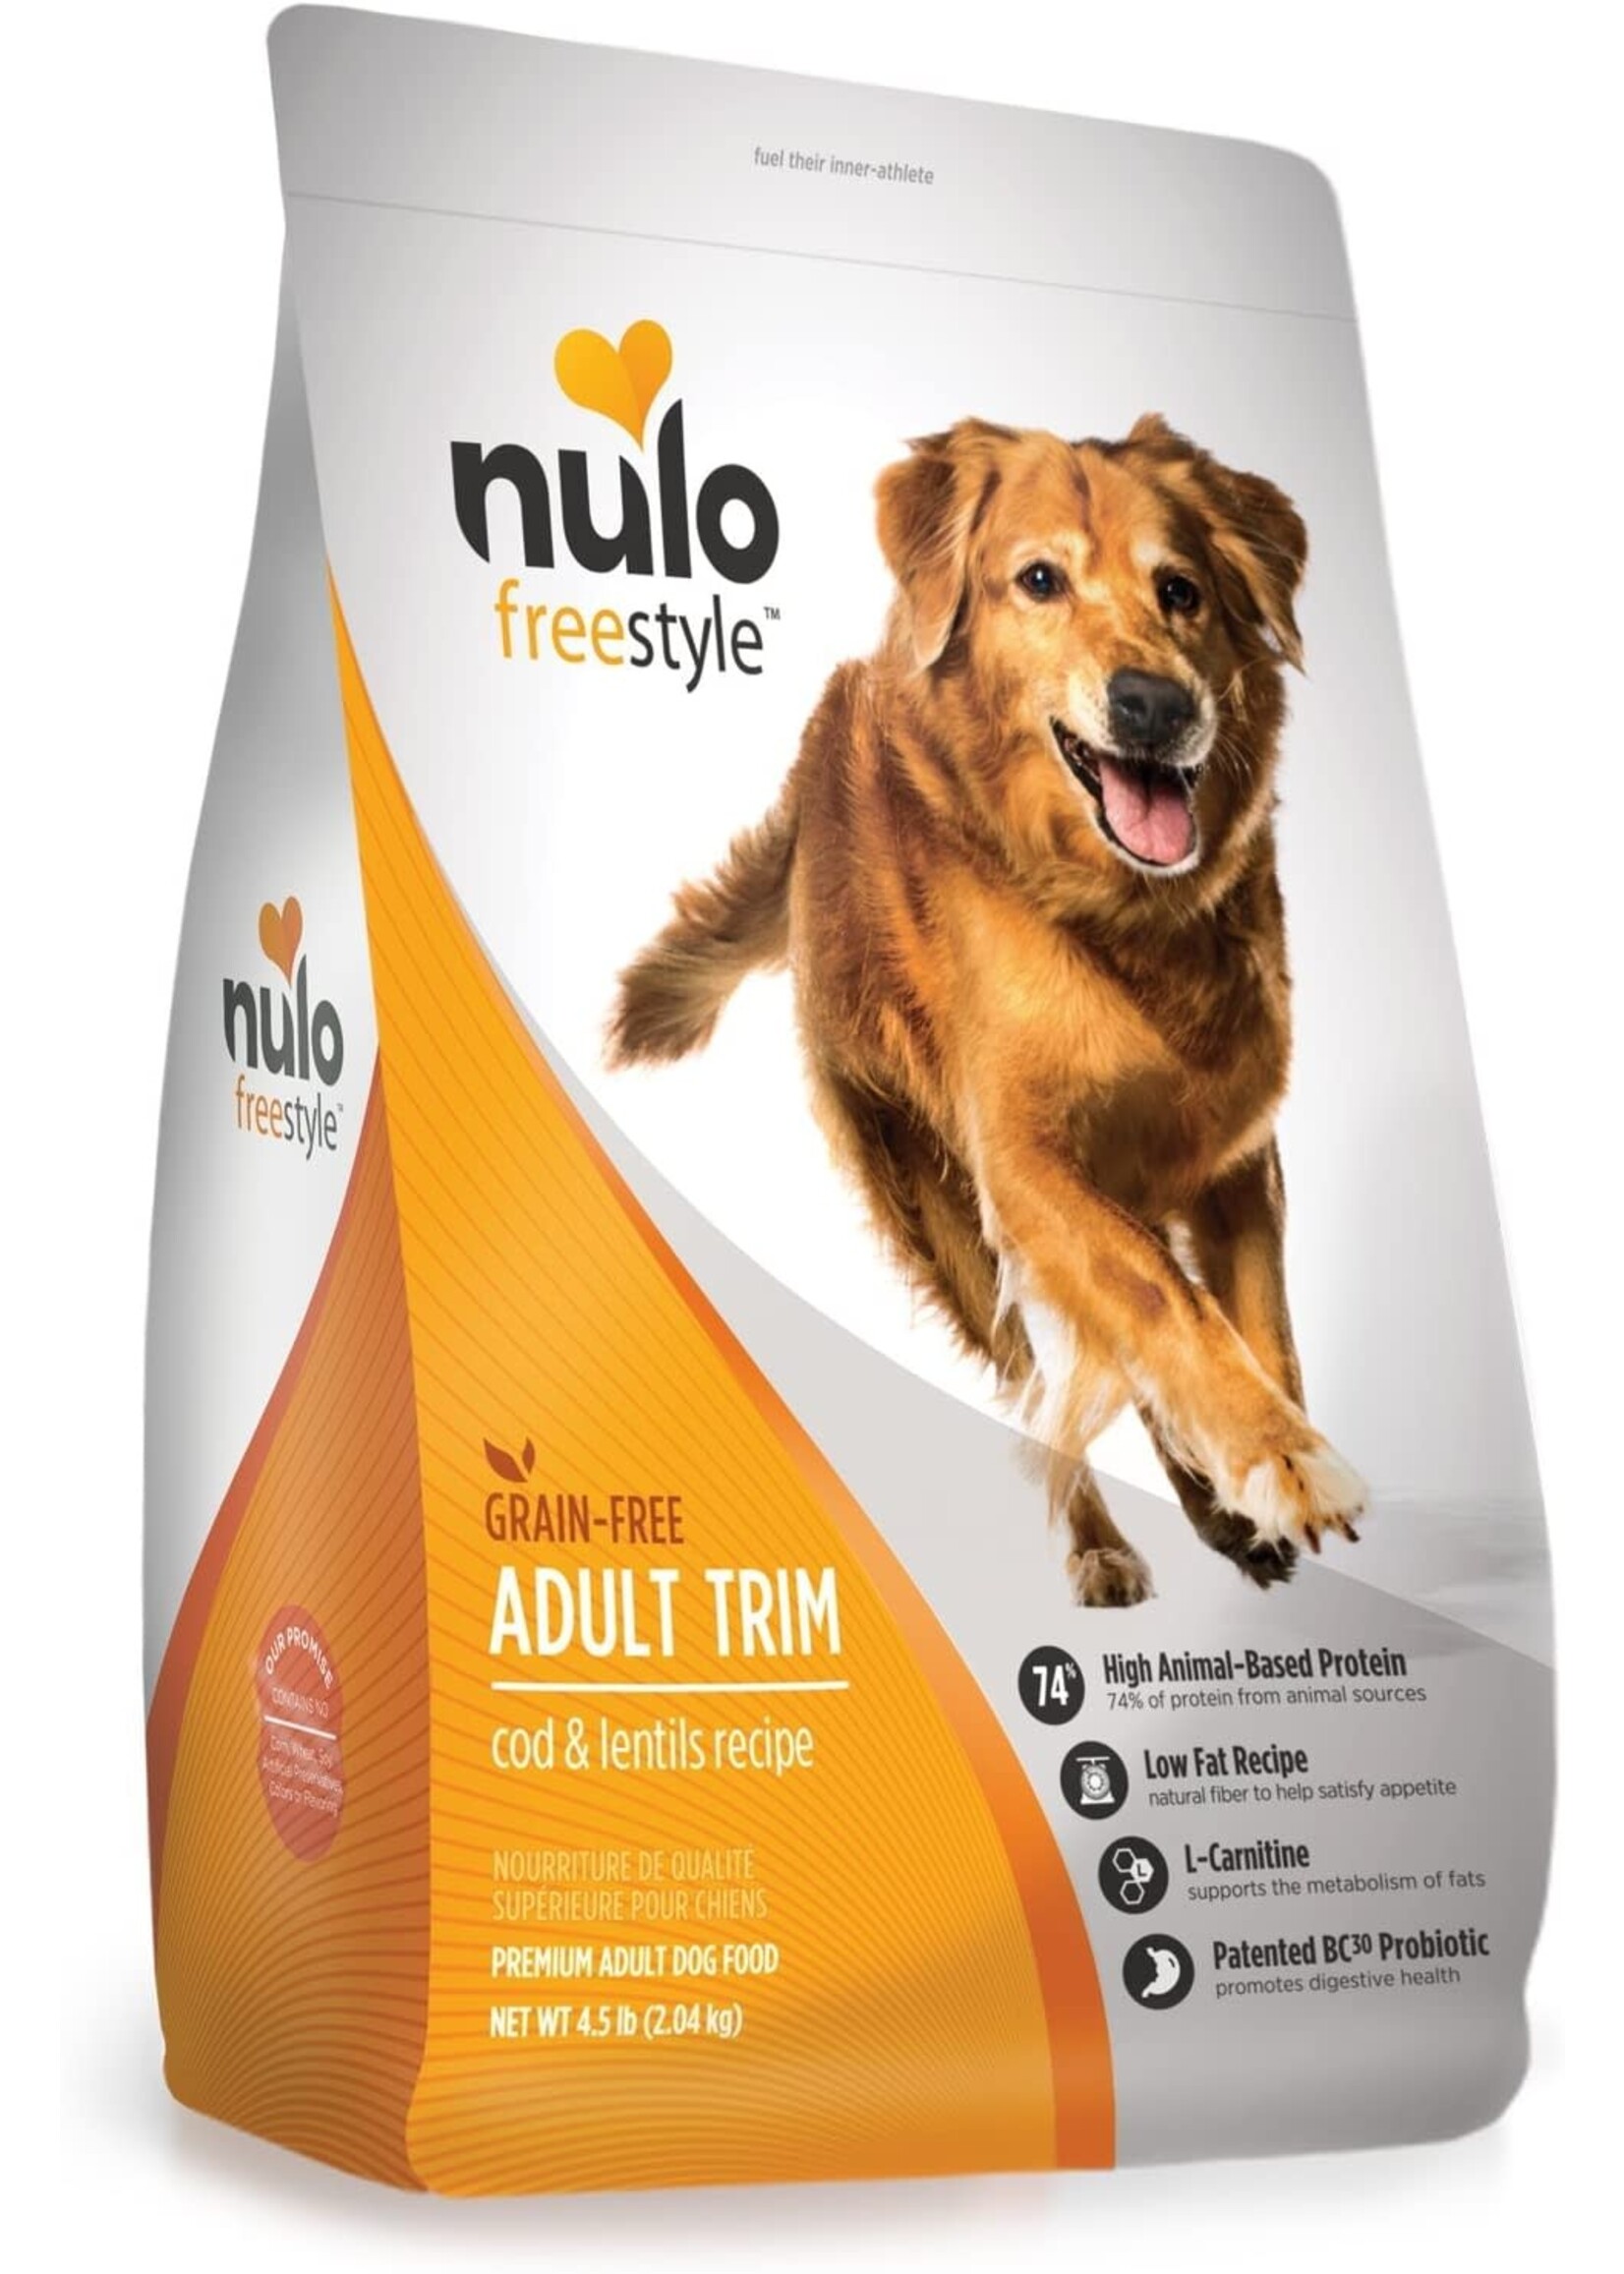 Nulo FreeStyle Cod & Lentils Recipe Weight Management Adult Trim Dog Food 4.5 lb